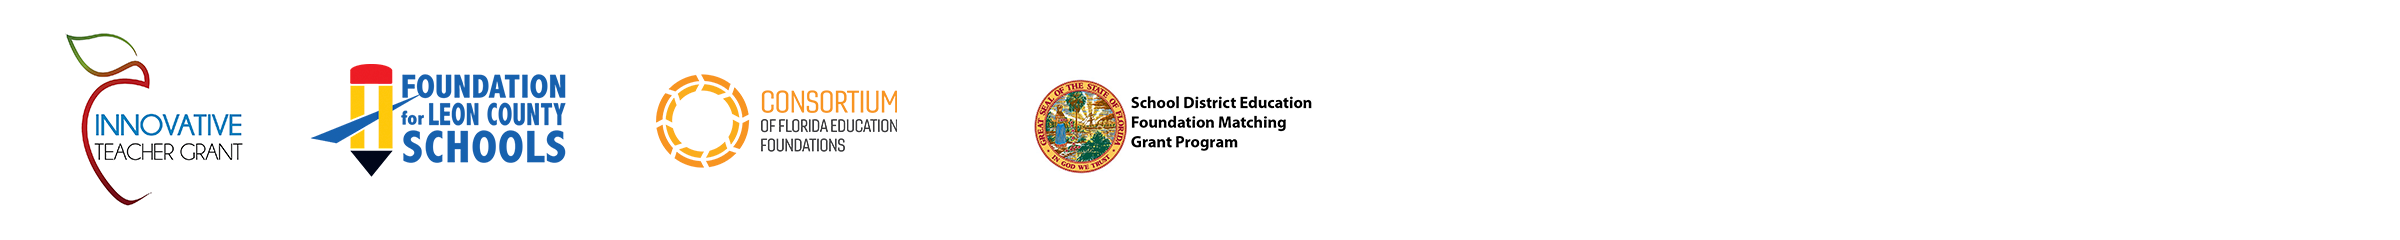 Foundation for Leon County Schools System logo